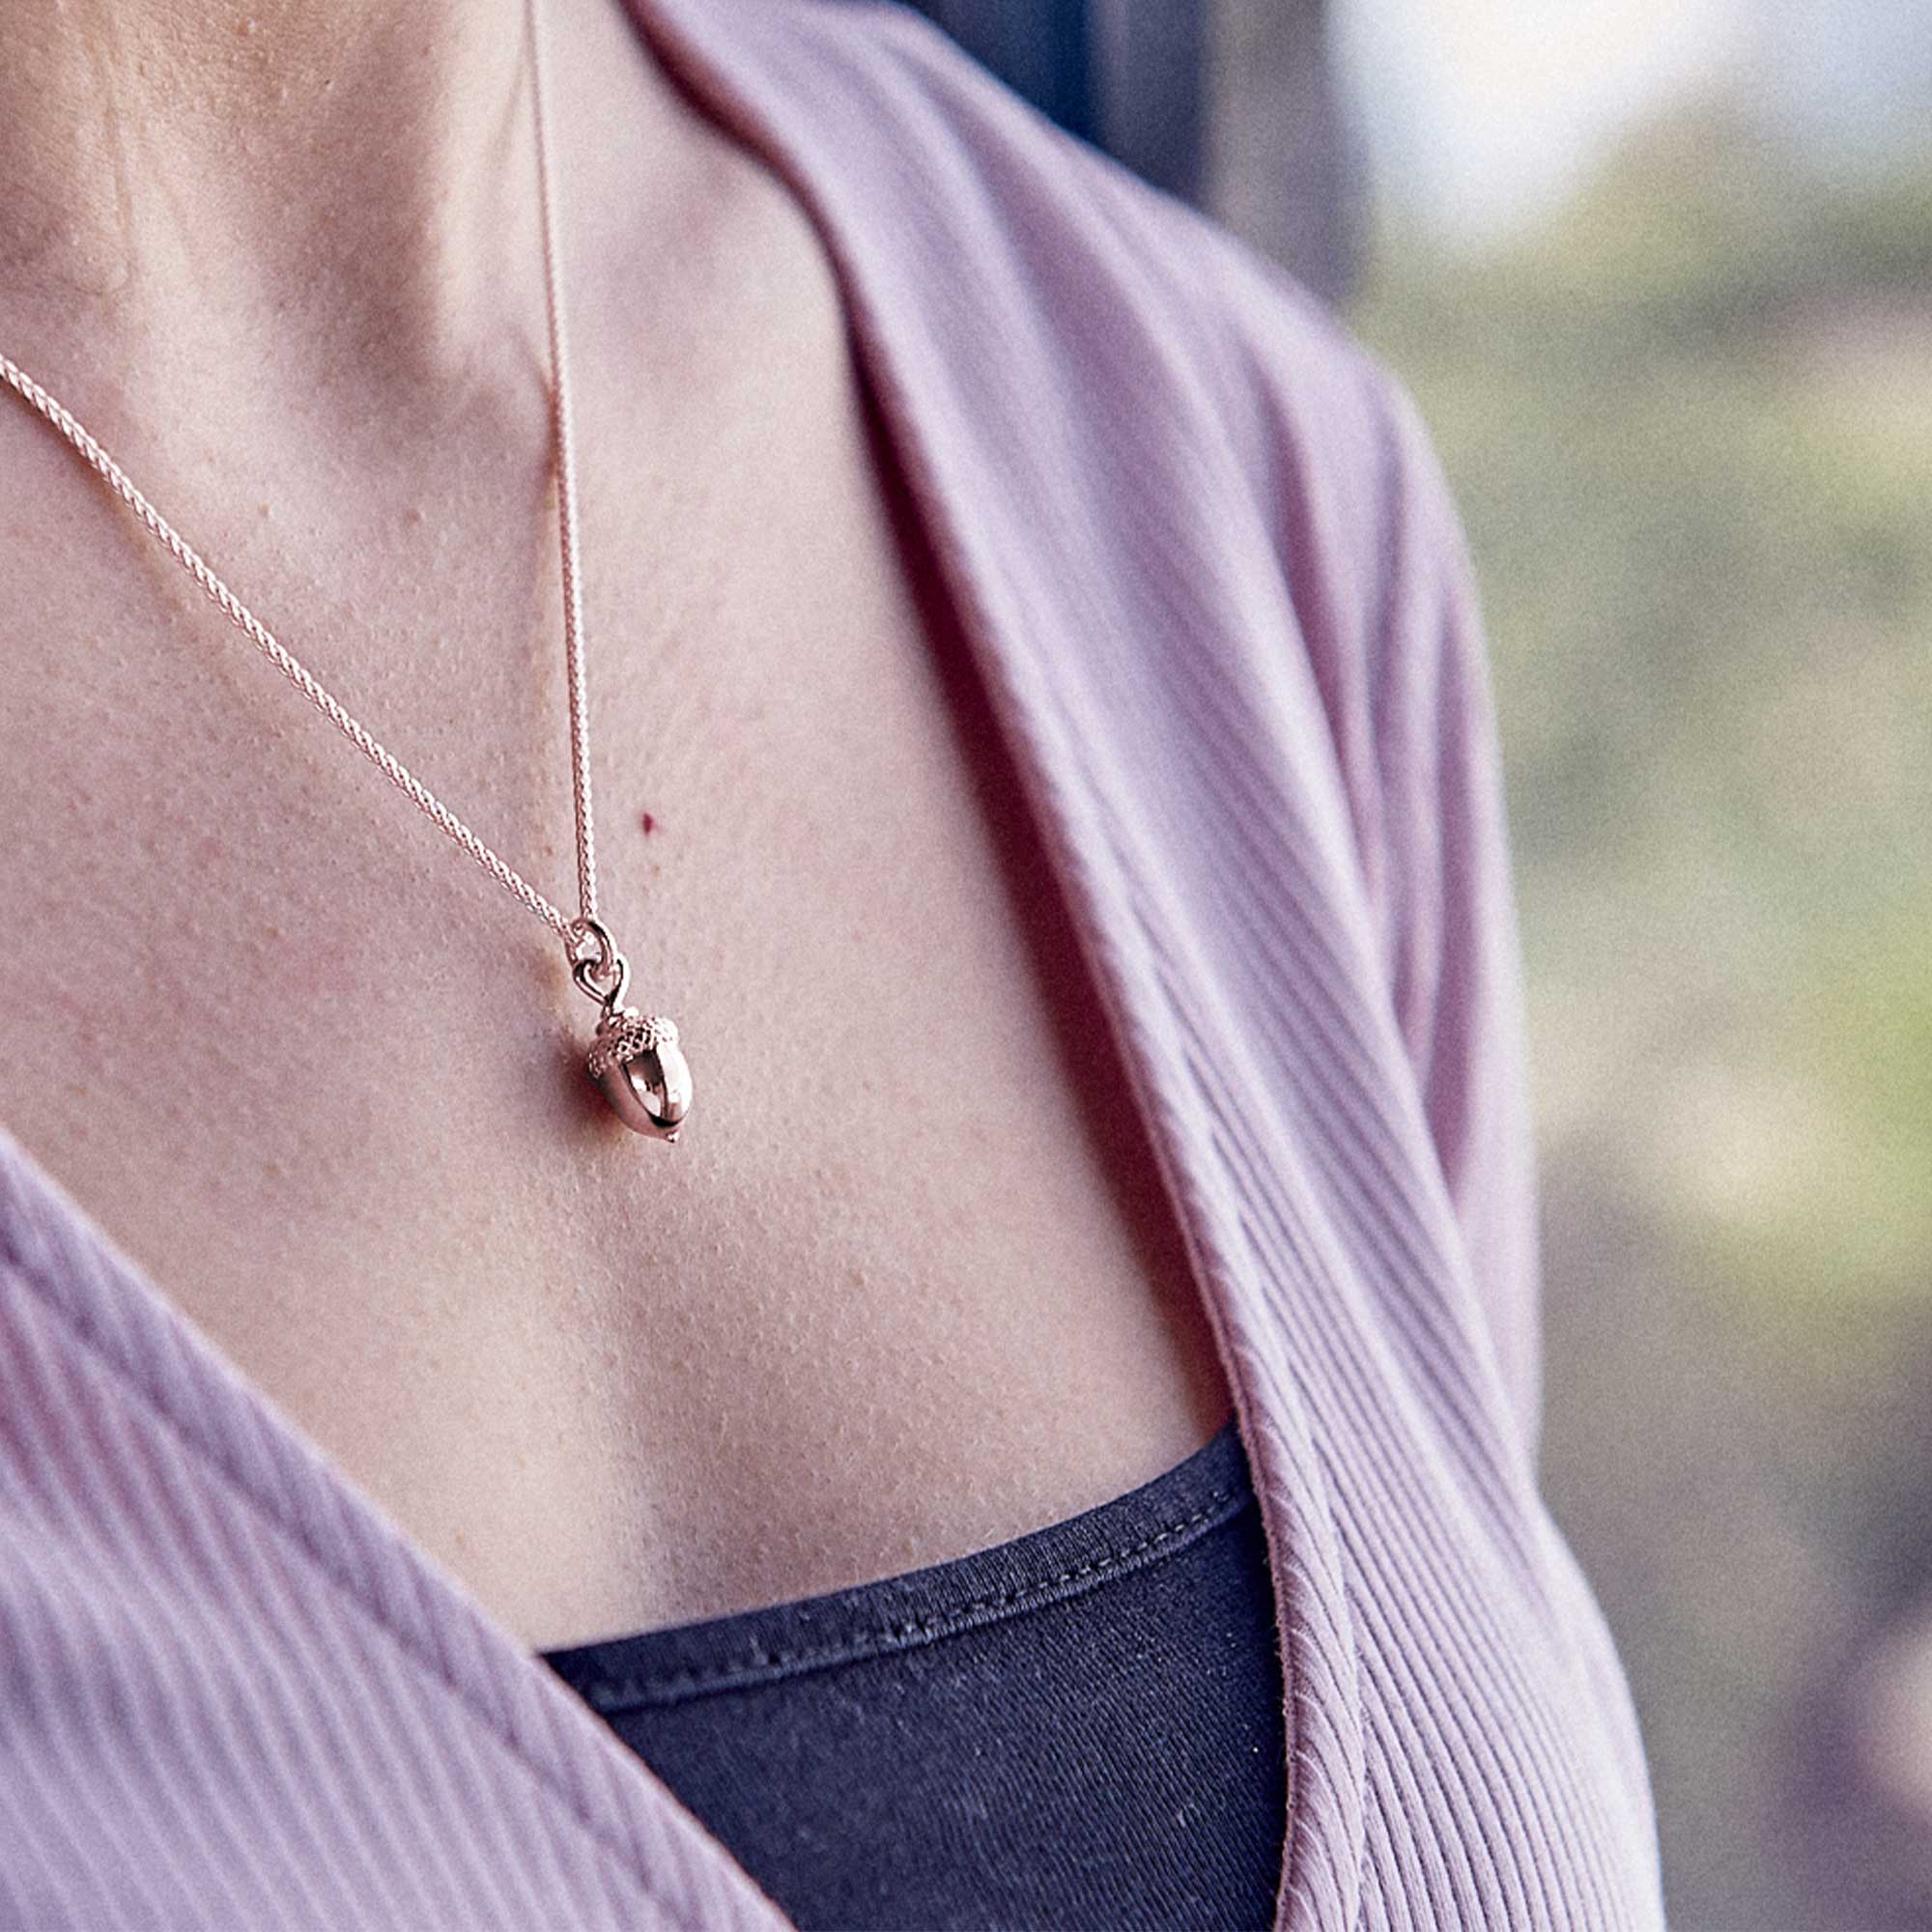 Acorn Necklace in Solid Rose Gold - Exquisite Nature-inspired Design